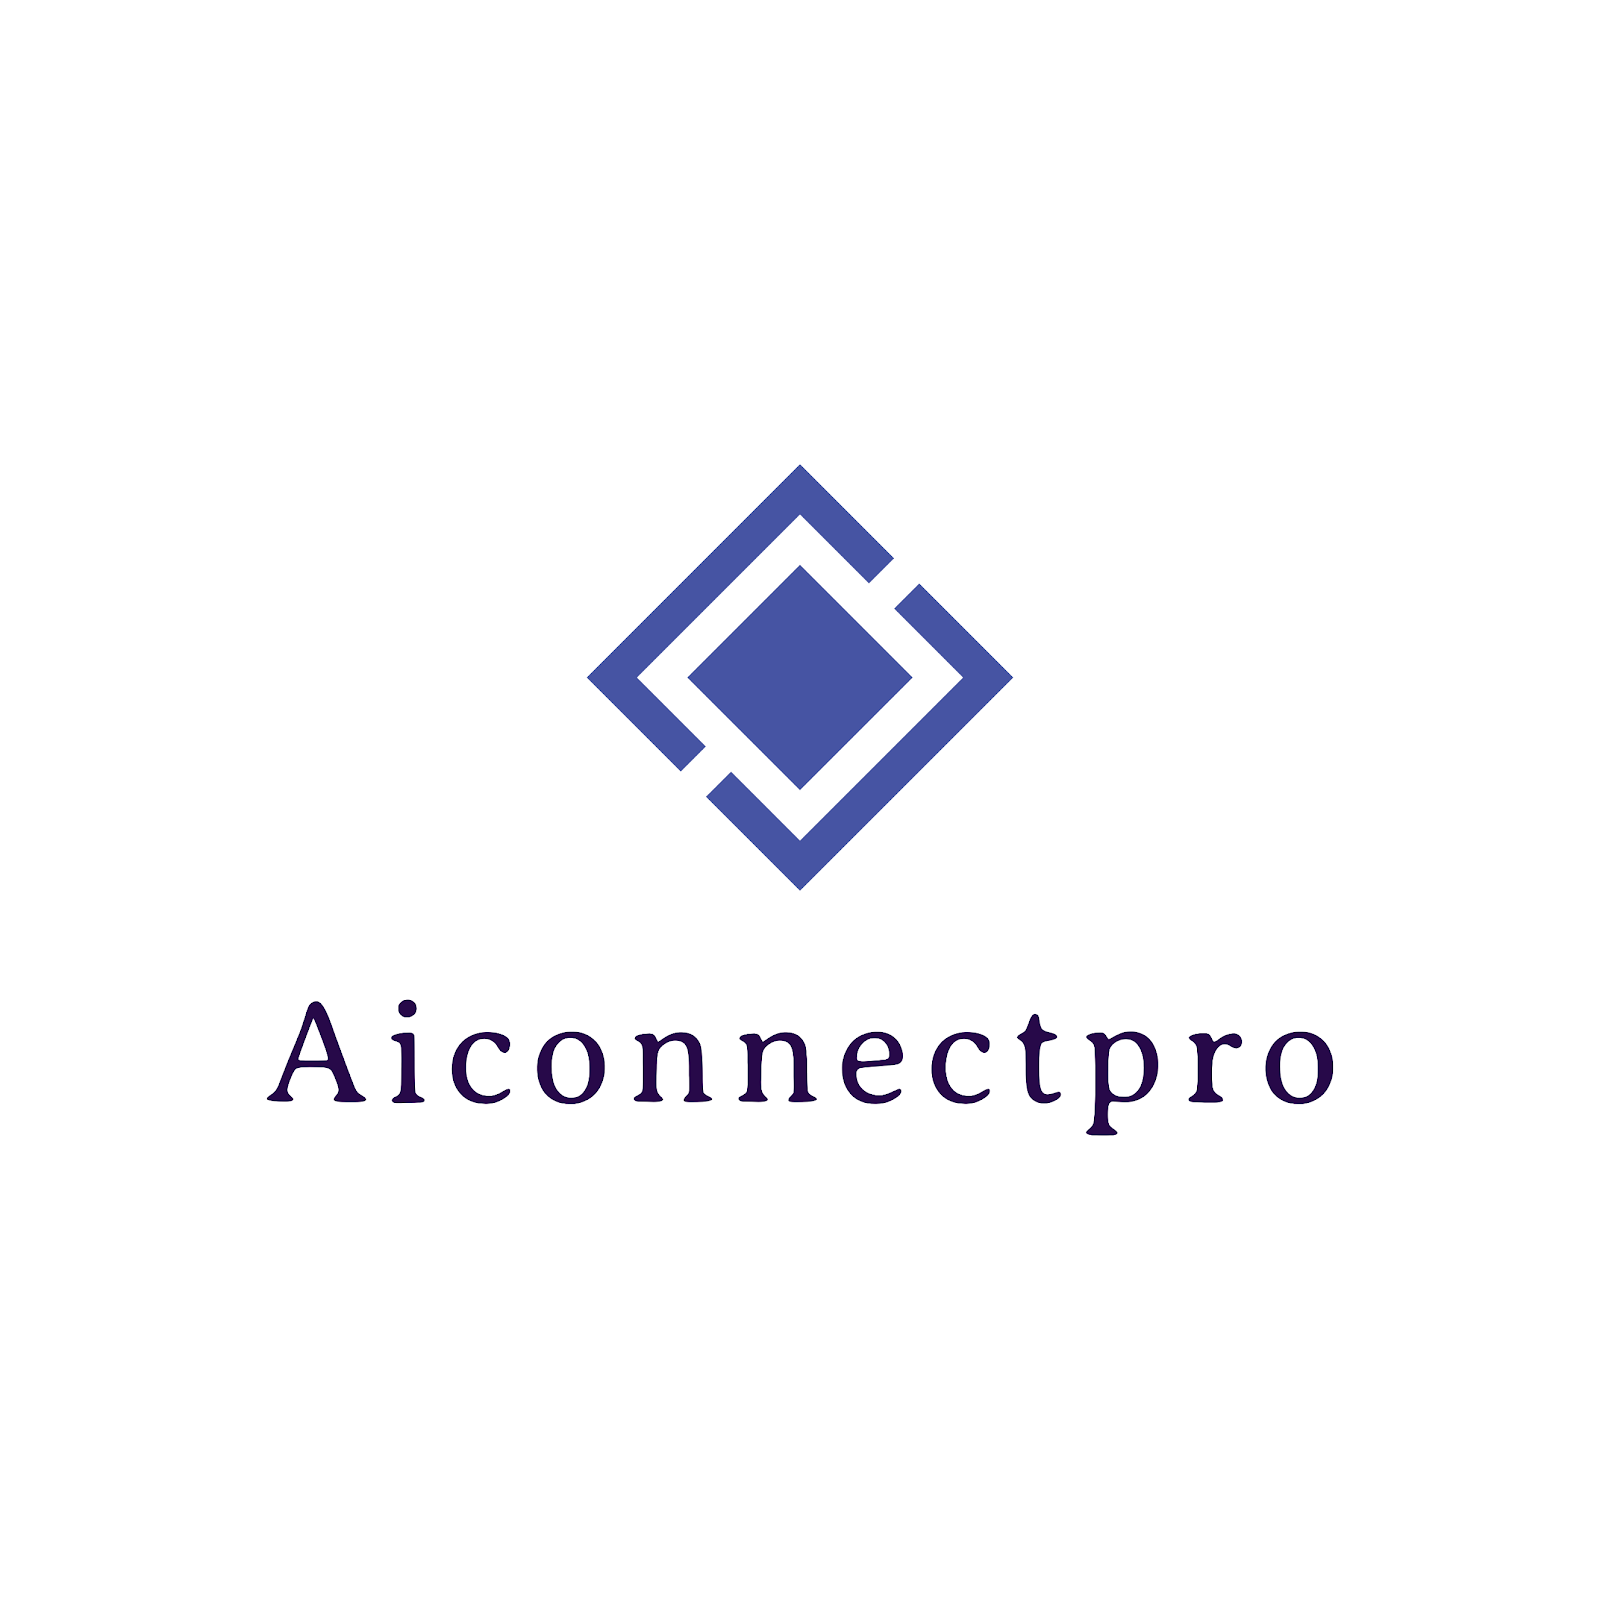 Aiconnectpro, LLC